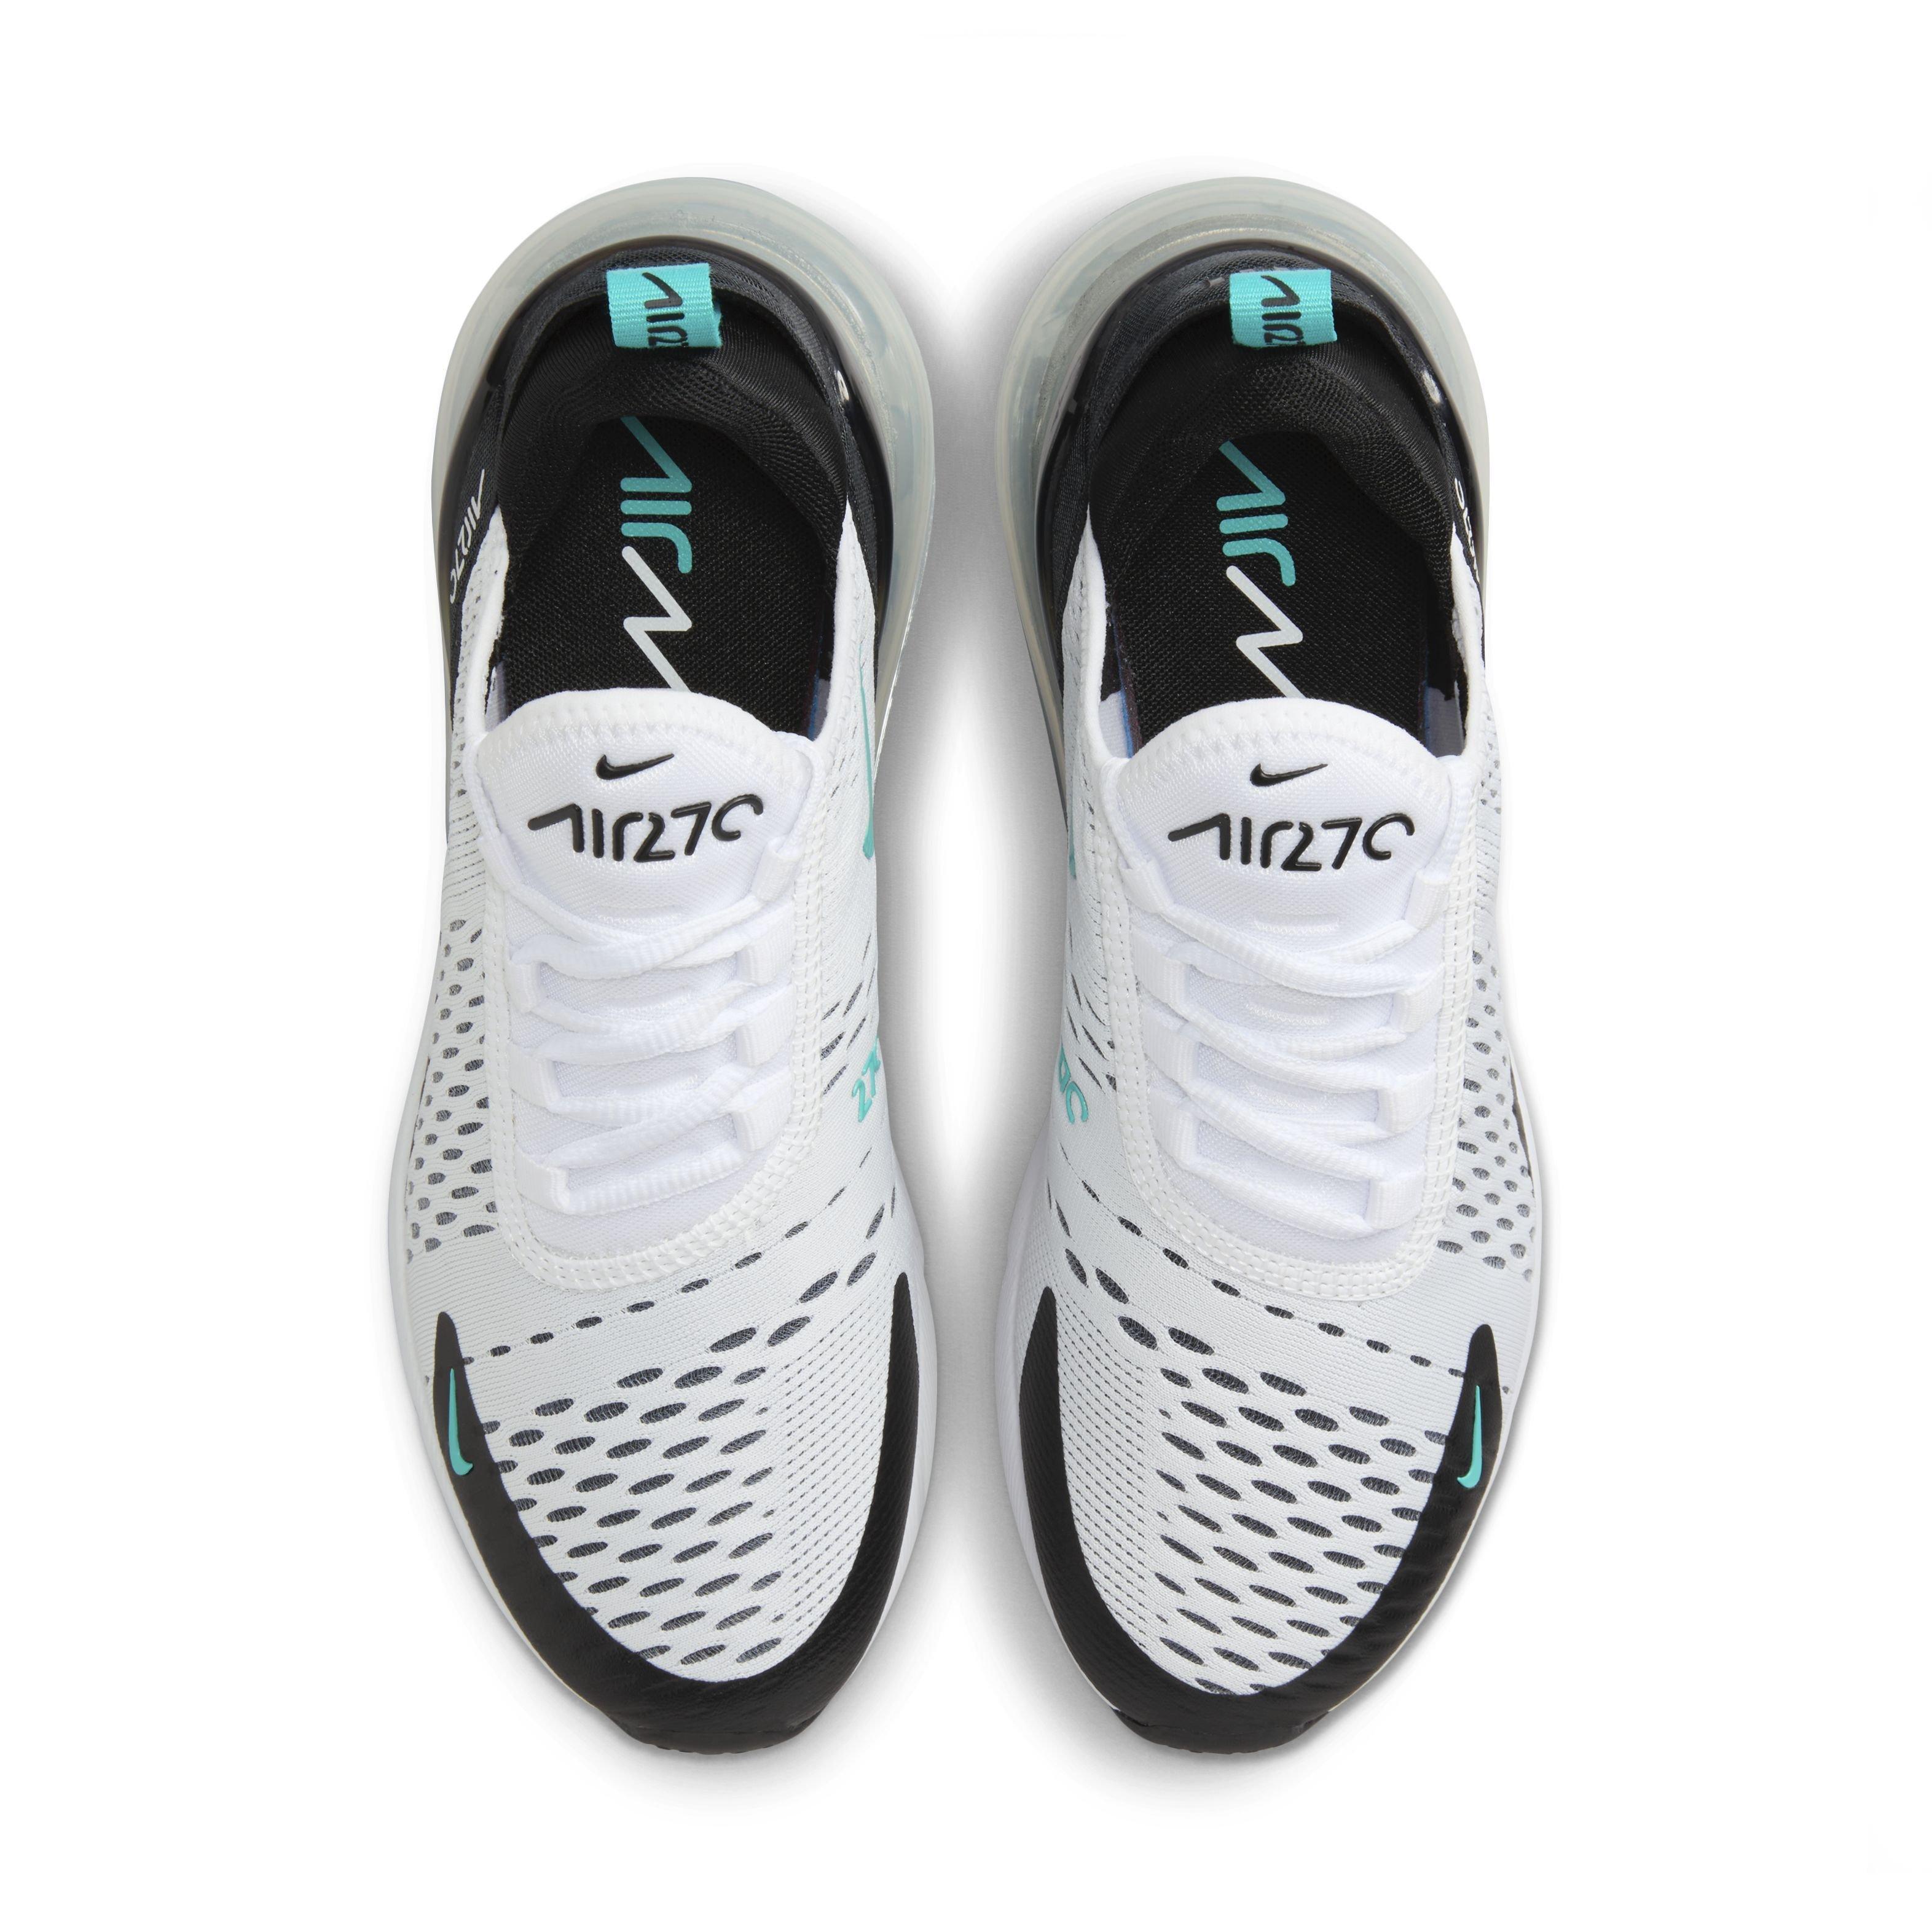 Nike Air Max 270 Women's Shoes